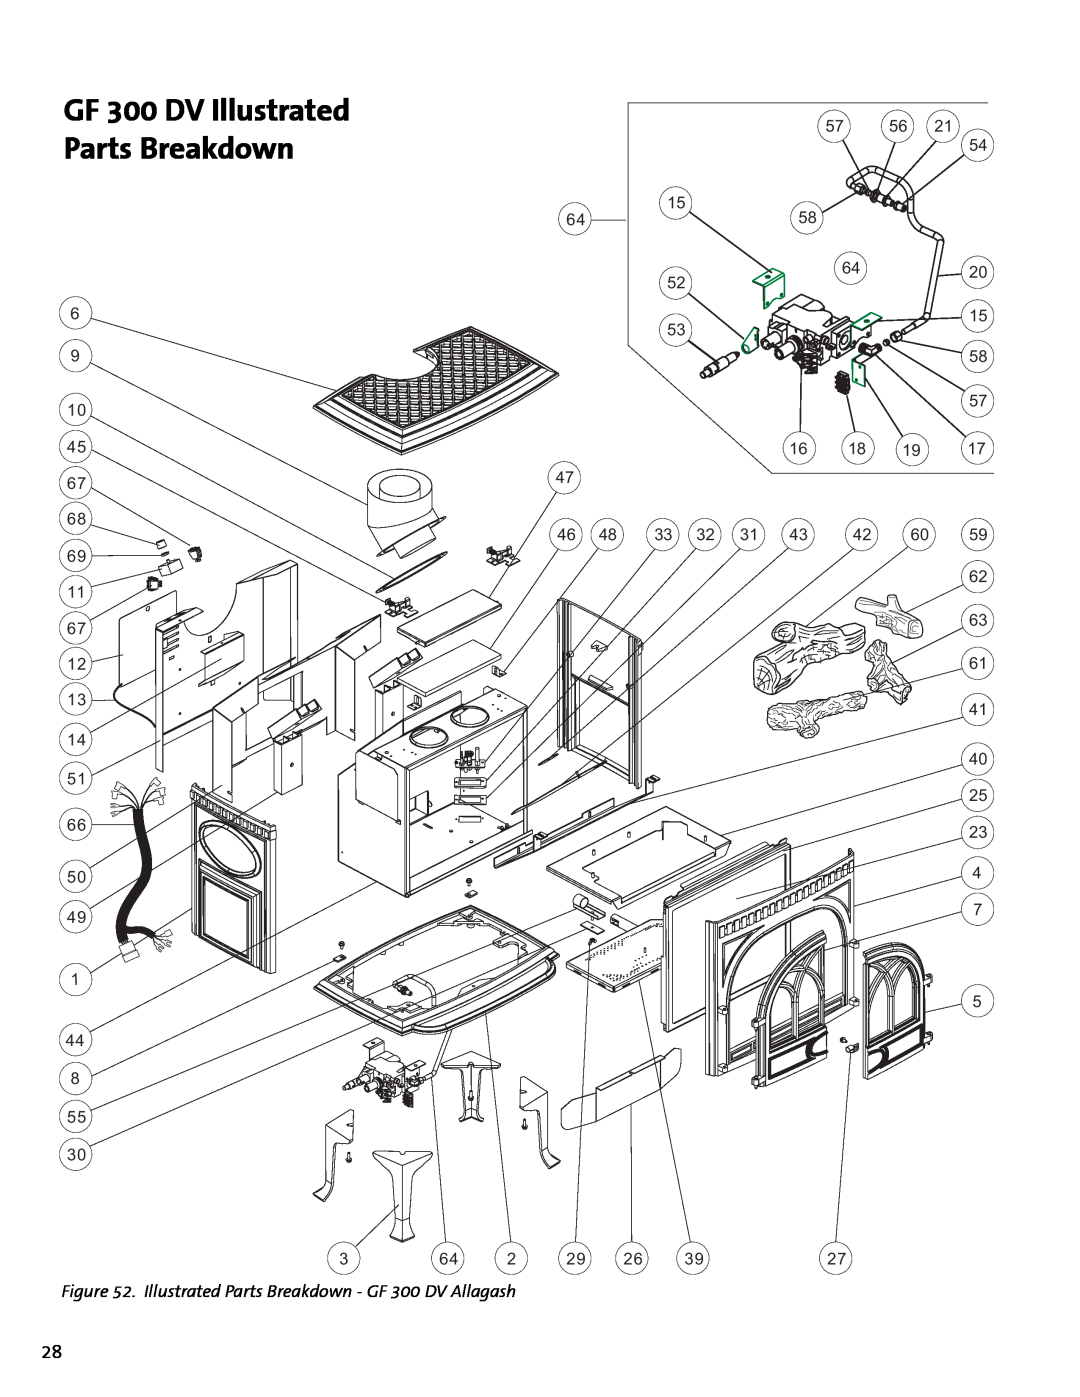 Jotul GF300 DV manual GF 300 DV Illustrated Parts Breakdown 